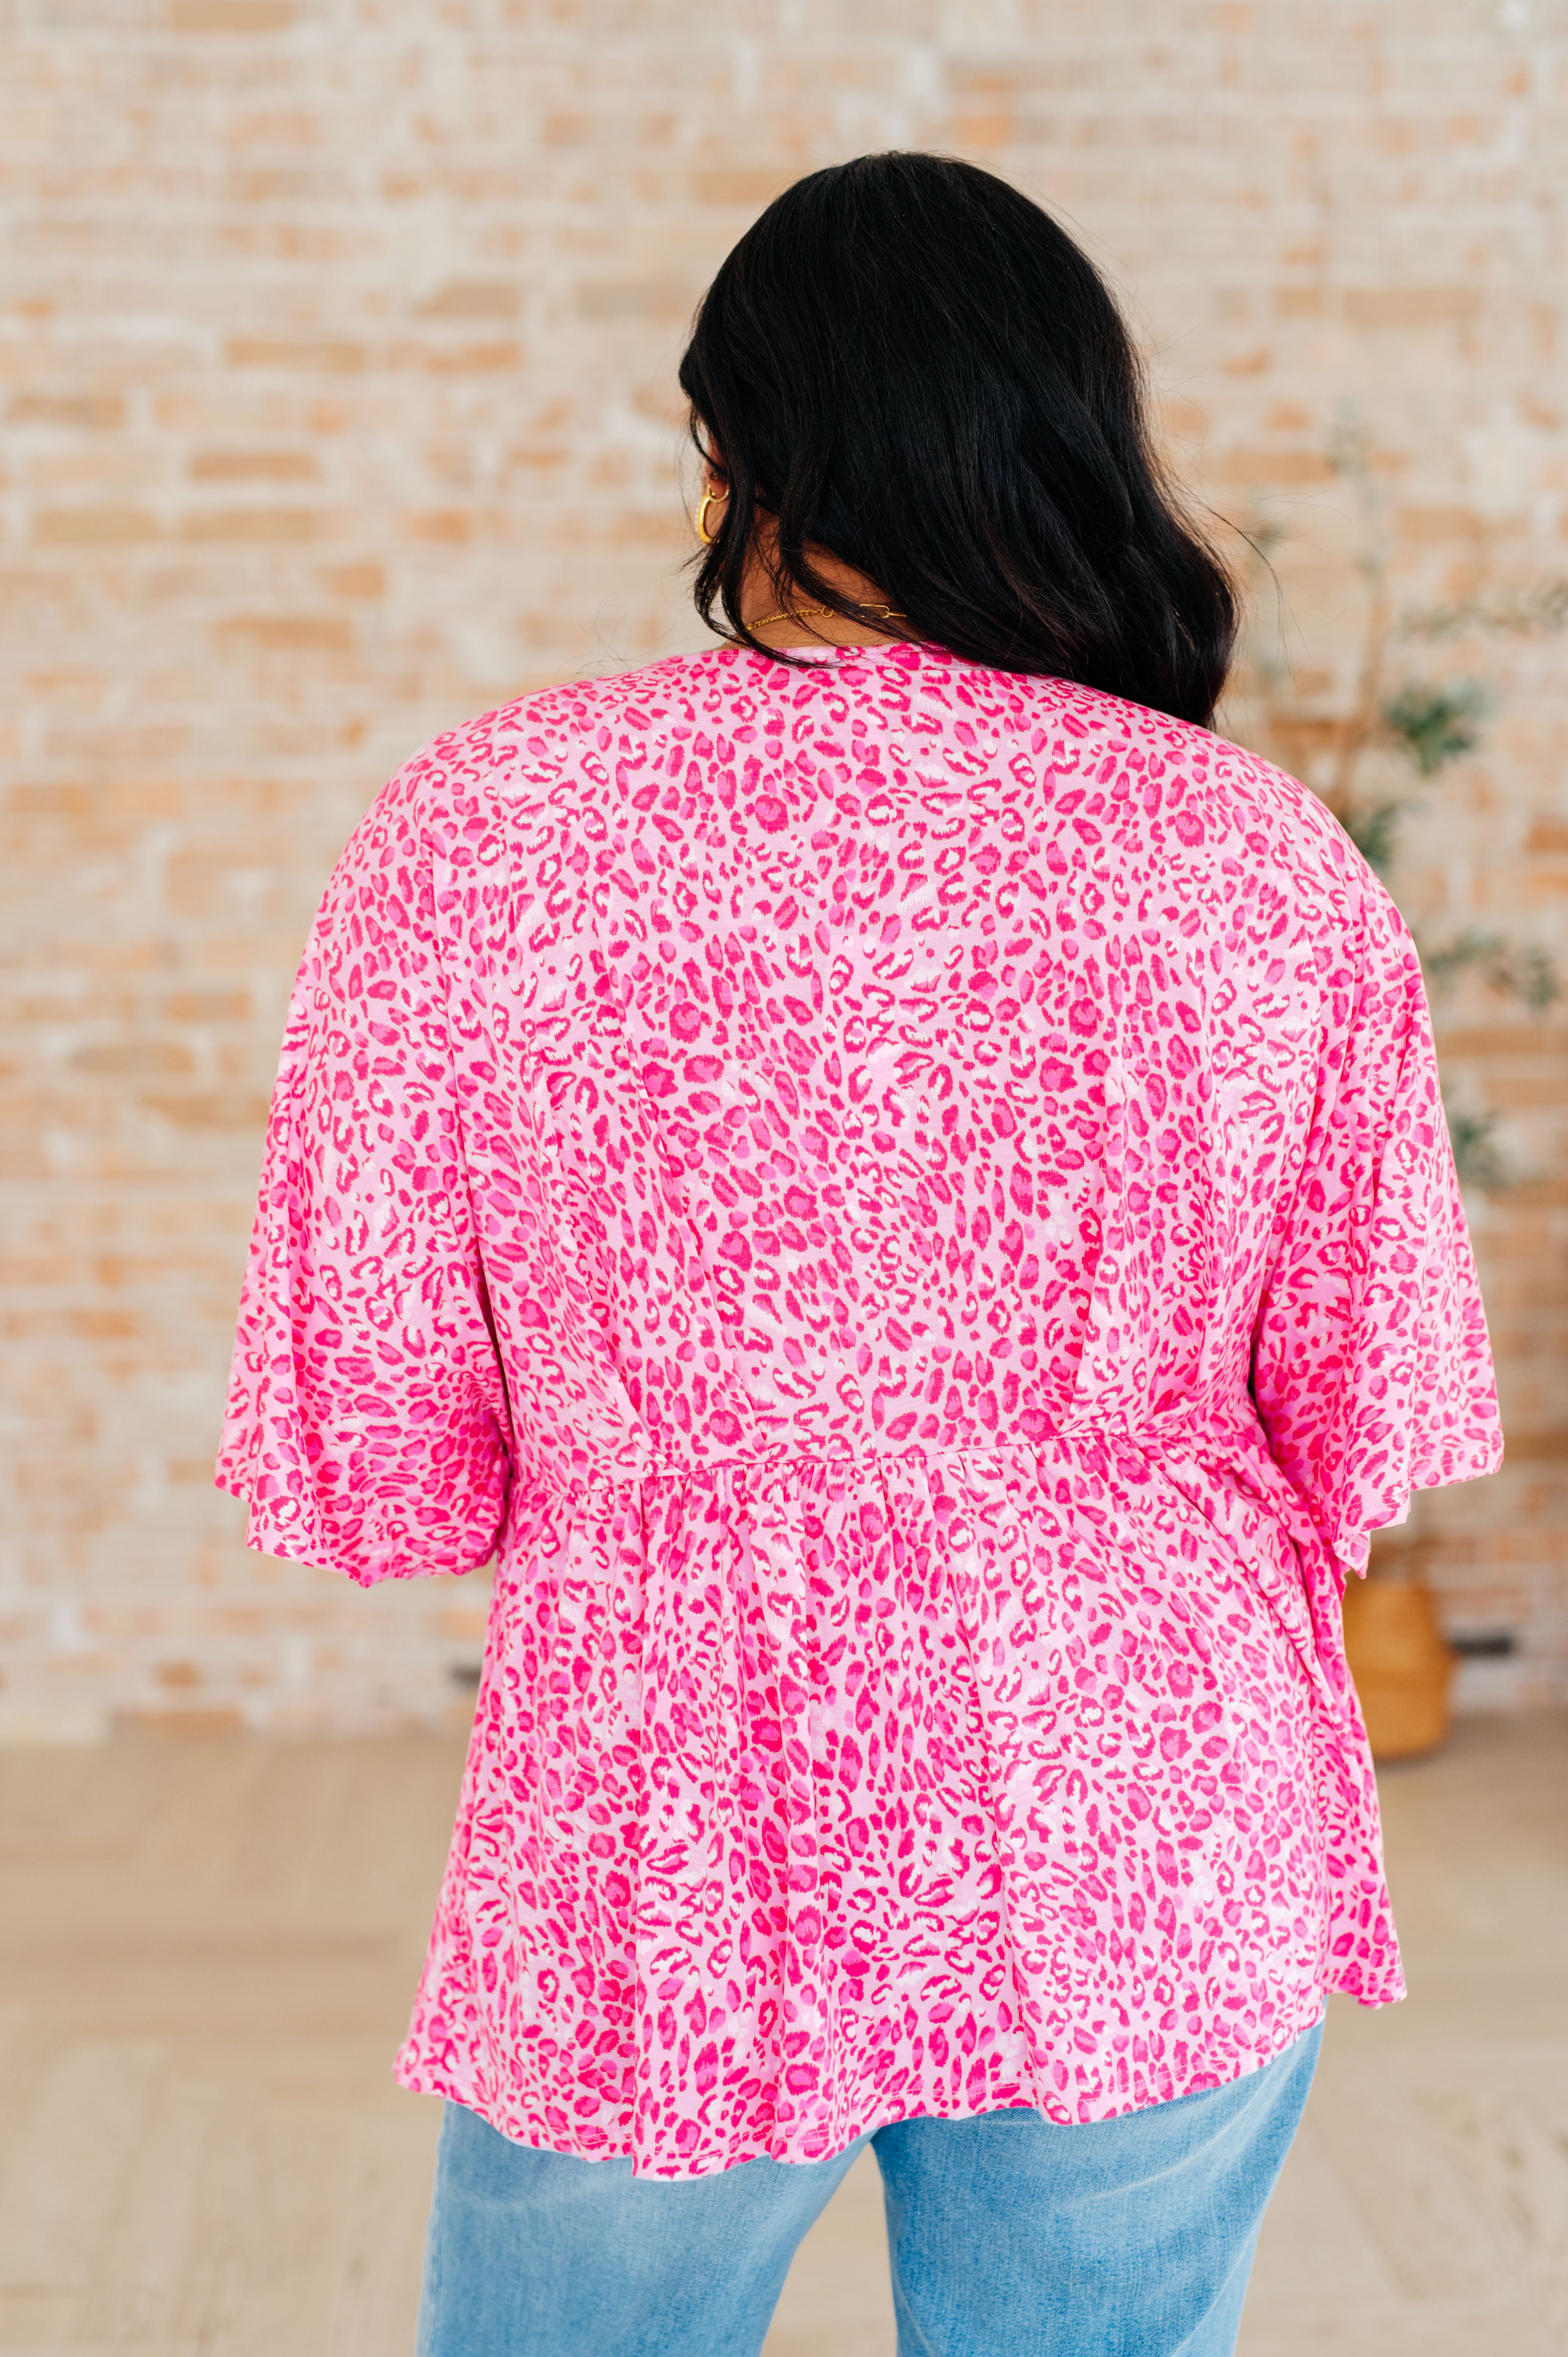 Dreamer Peplum Top in Pink Leopard-Long Sleeve Tops-Krush Kandy, Women's Online Fashion Boutique Located in Phoenix, Arizona (Scottsdale Area)